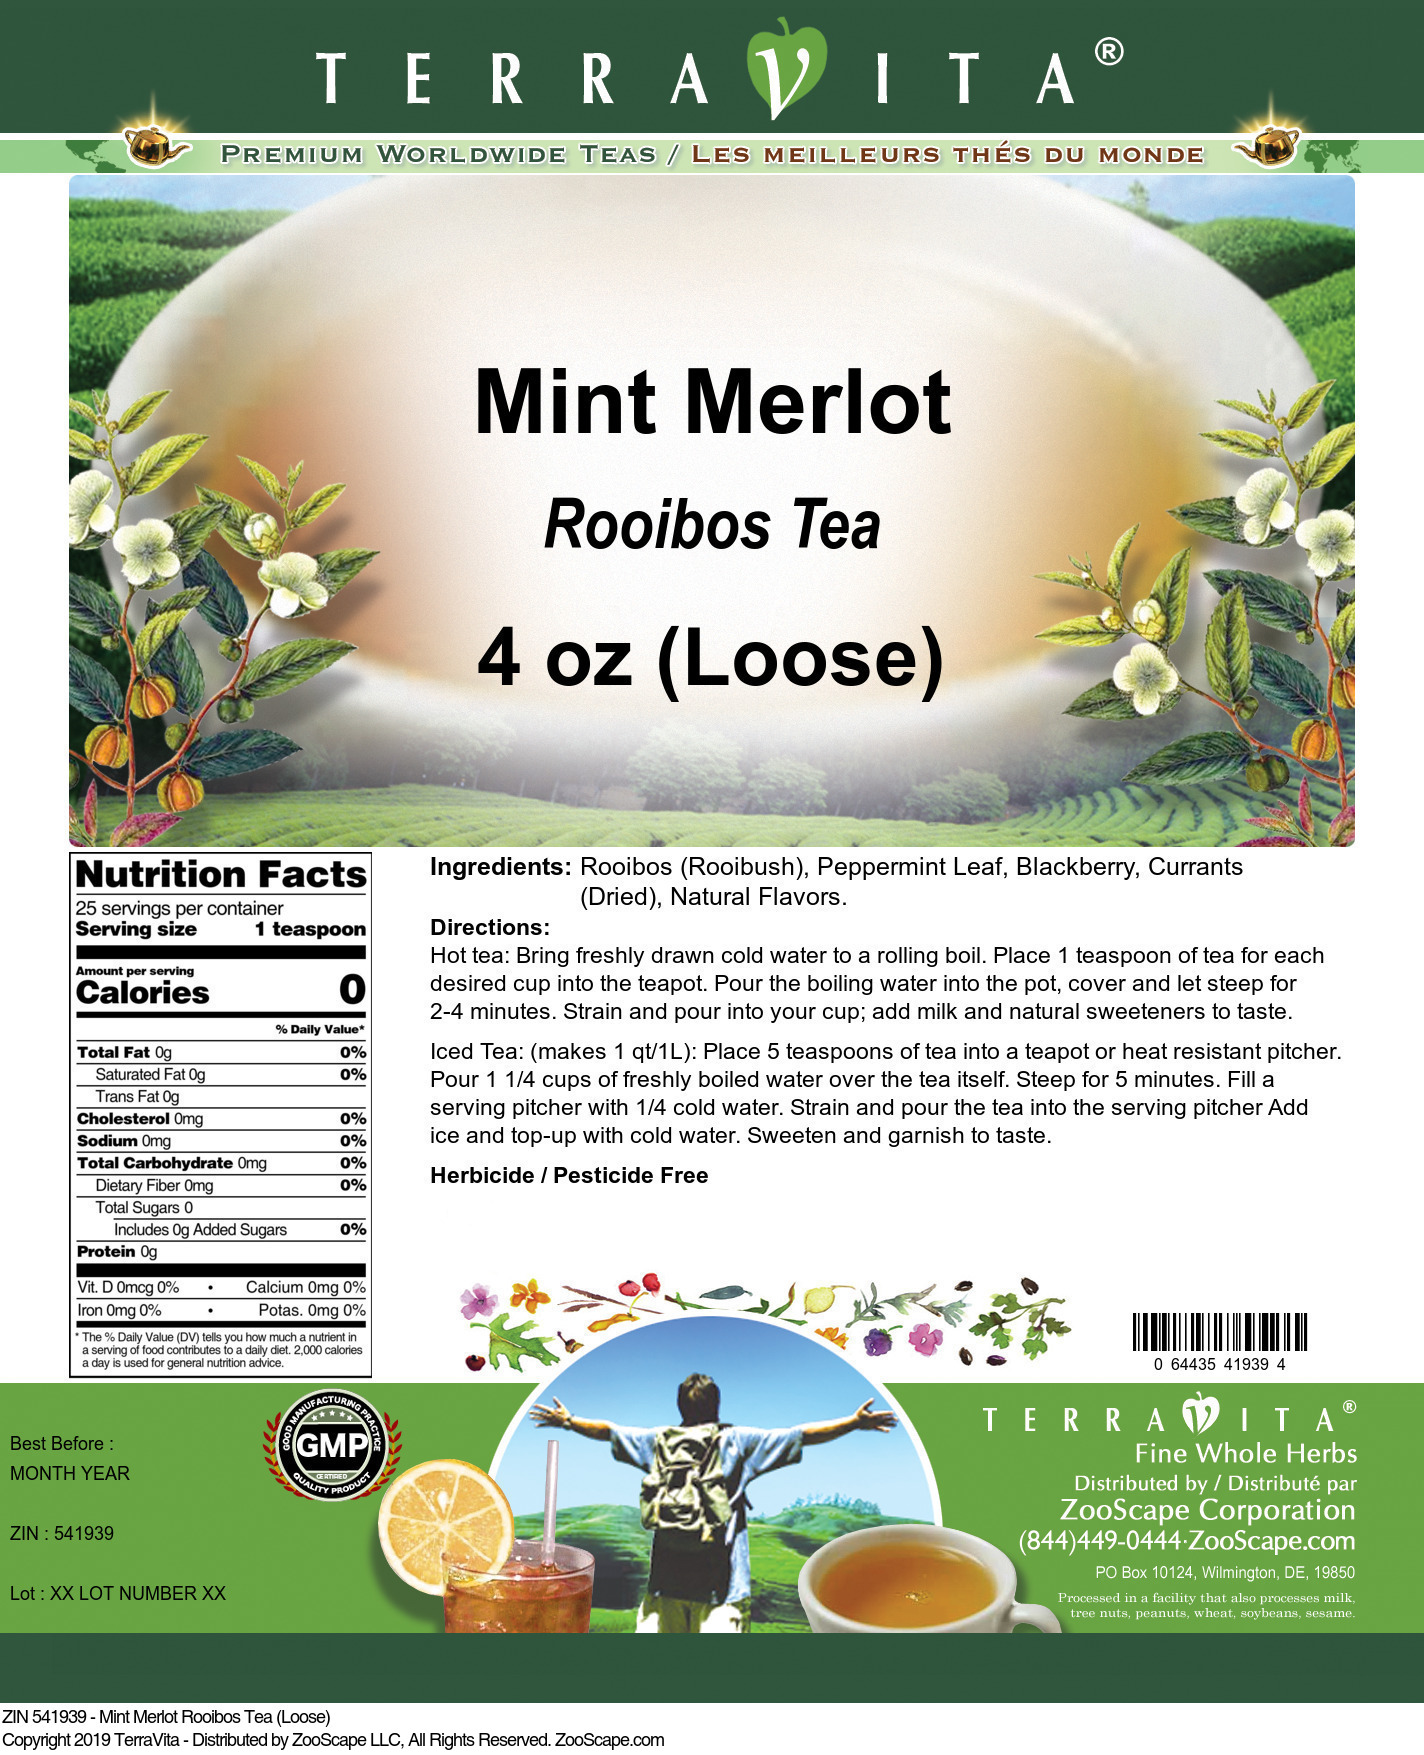 Mint Merlot Rooibos Tea (Loose) - Label